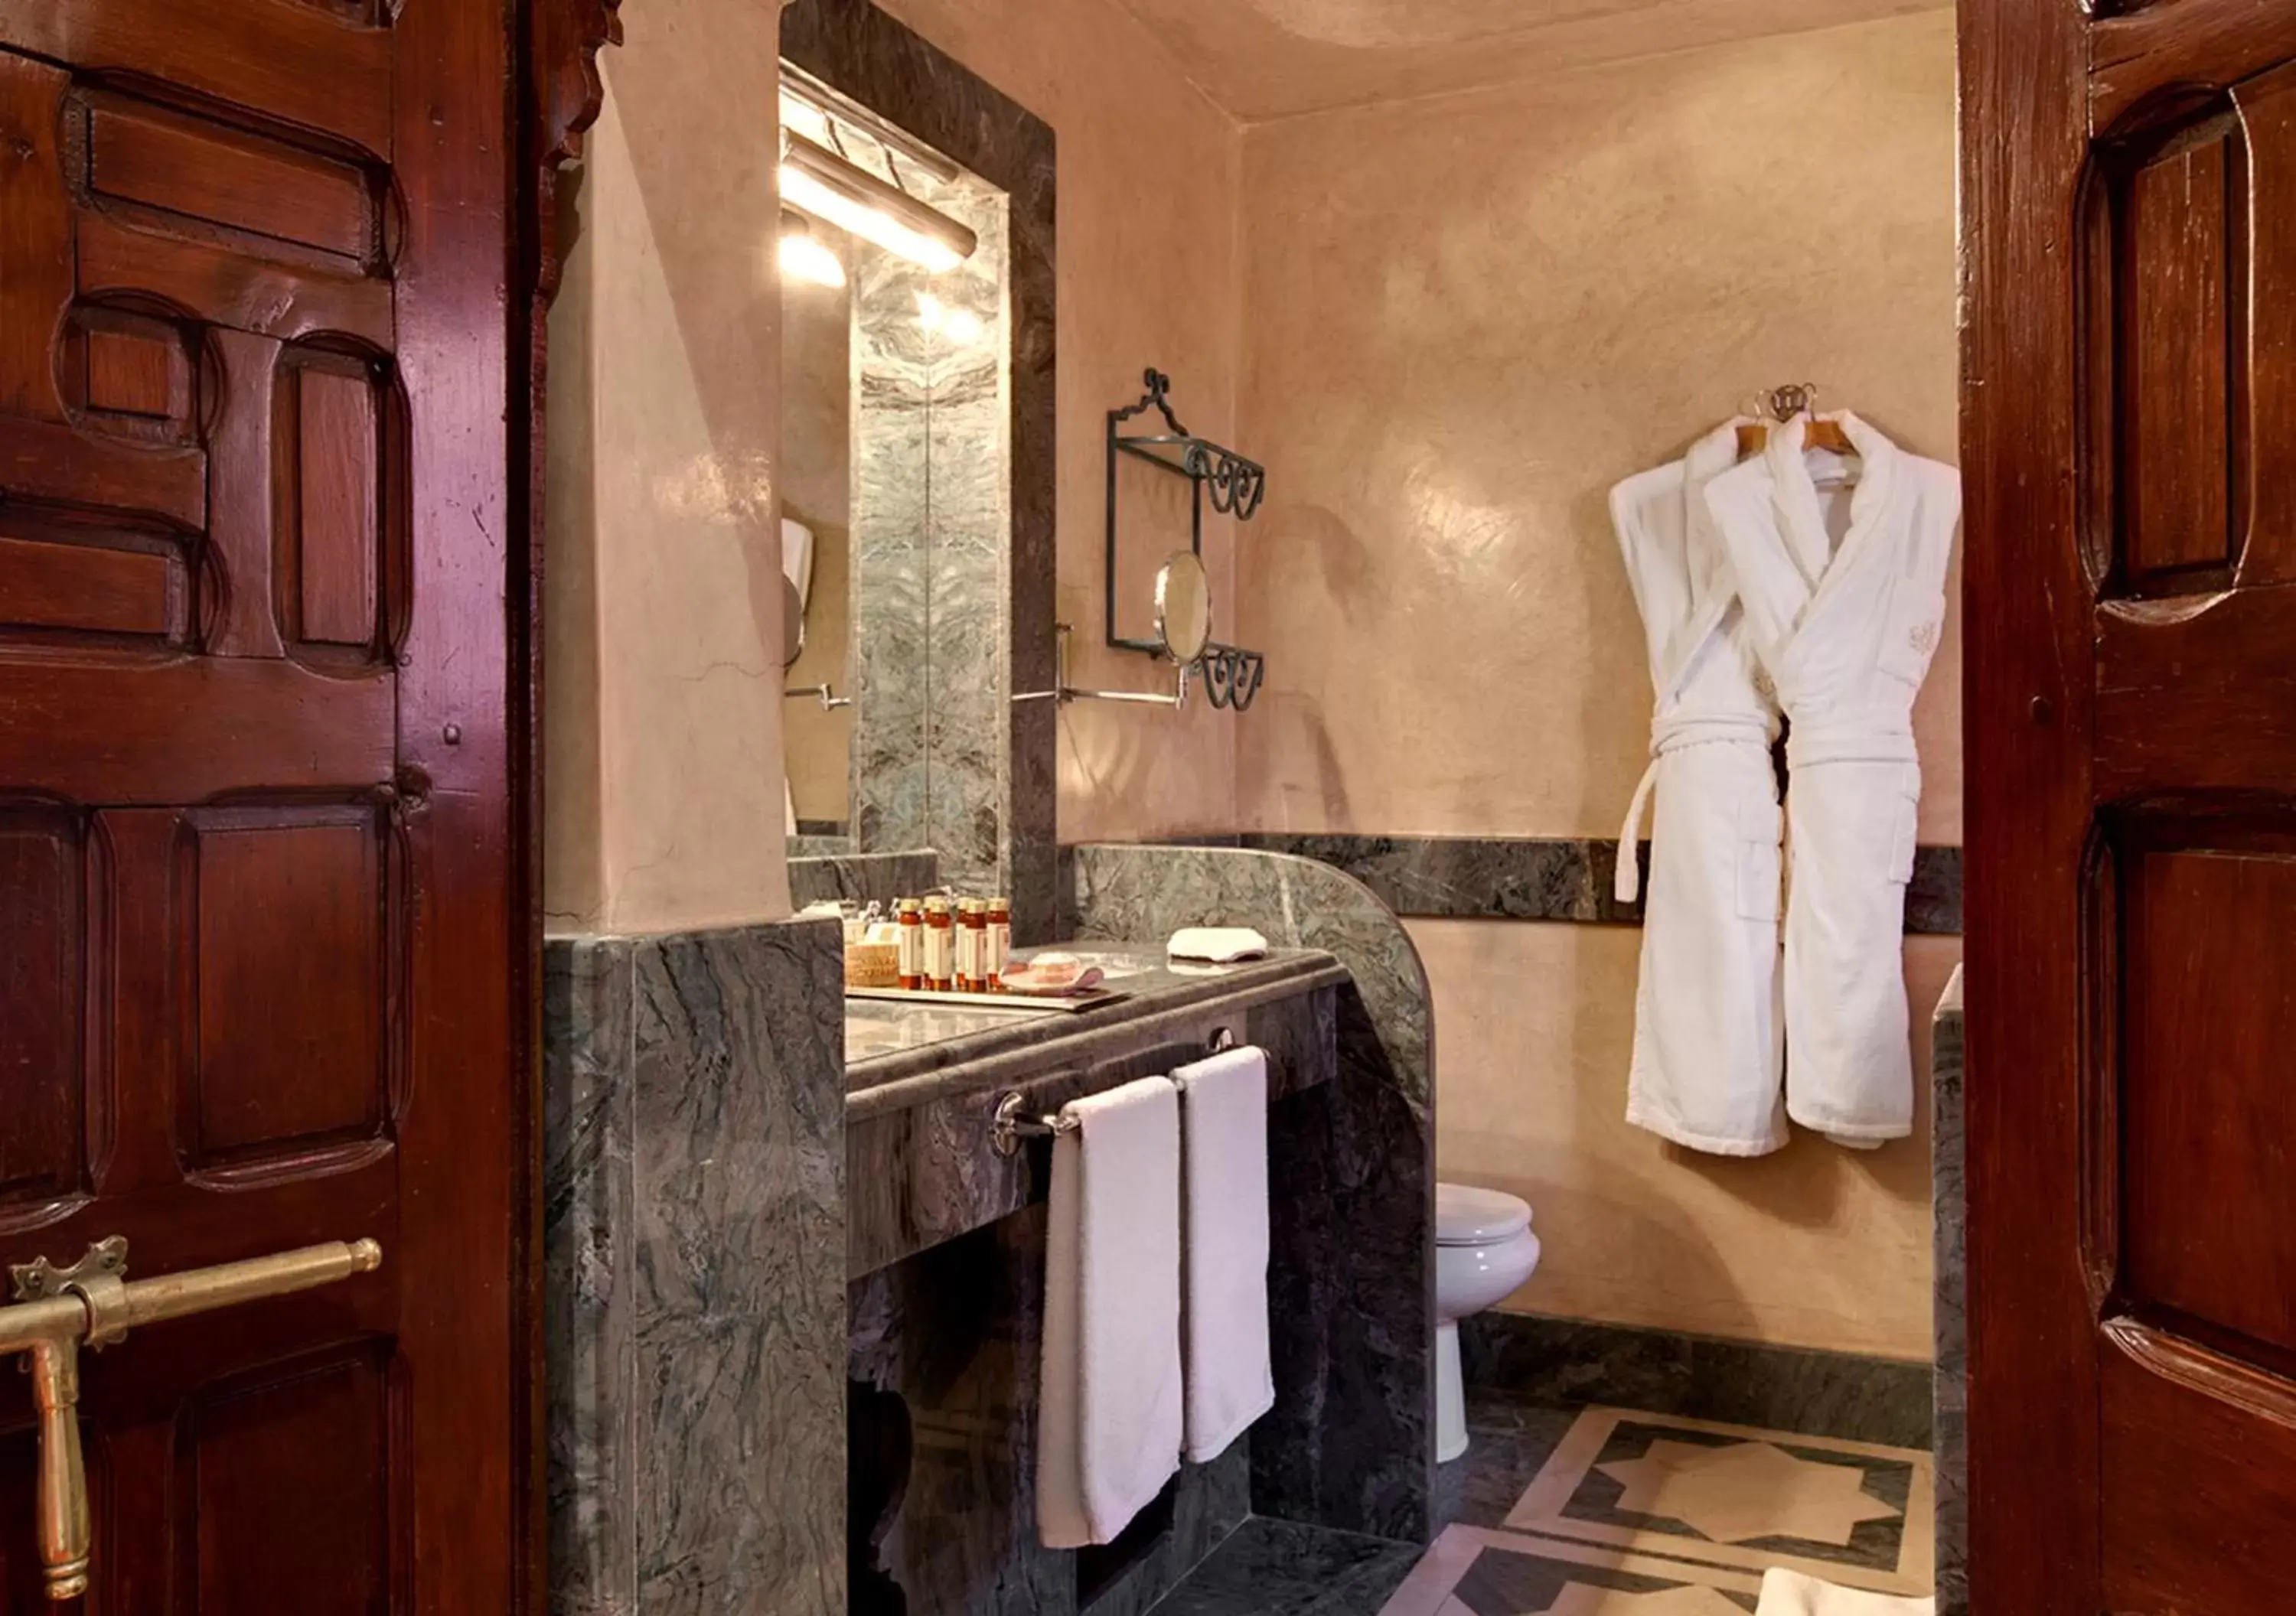 Bathroom in La Maison Arabe Hotel, Spa & Cooking Workshops